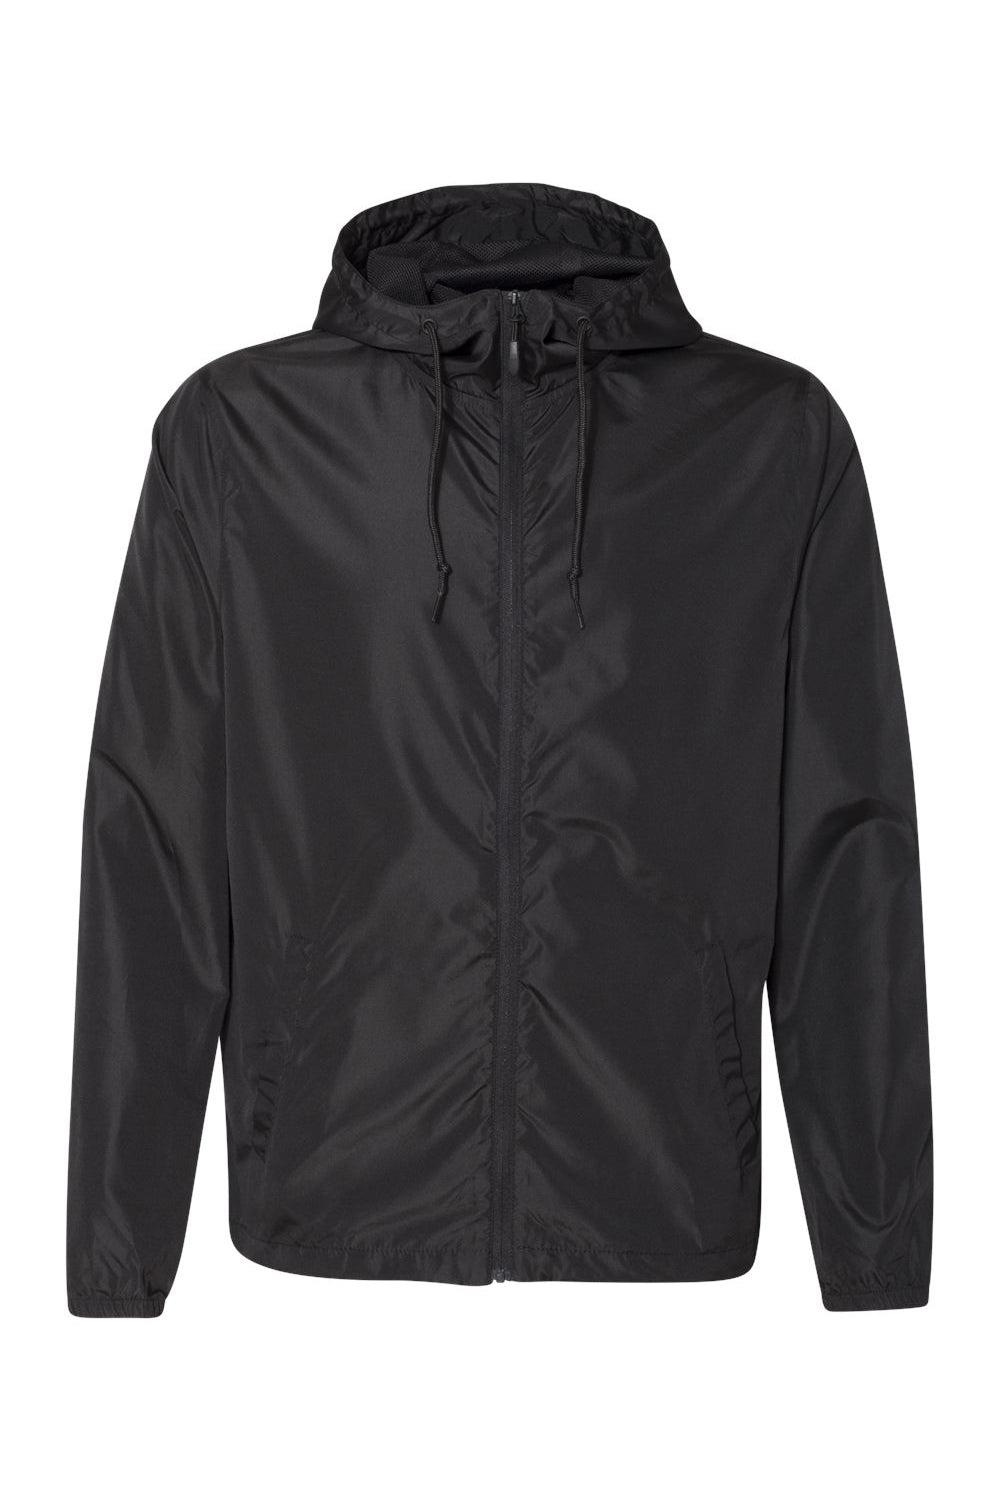 Independent Trading Co. EXP54LWZ Mens Full Zip Windbreaker Hooded Jacket Black Flat Front